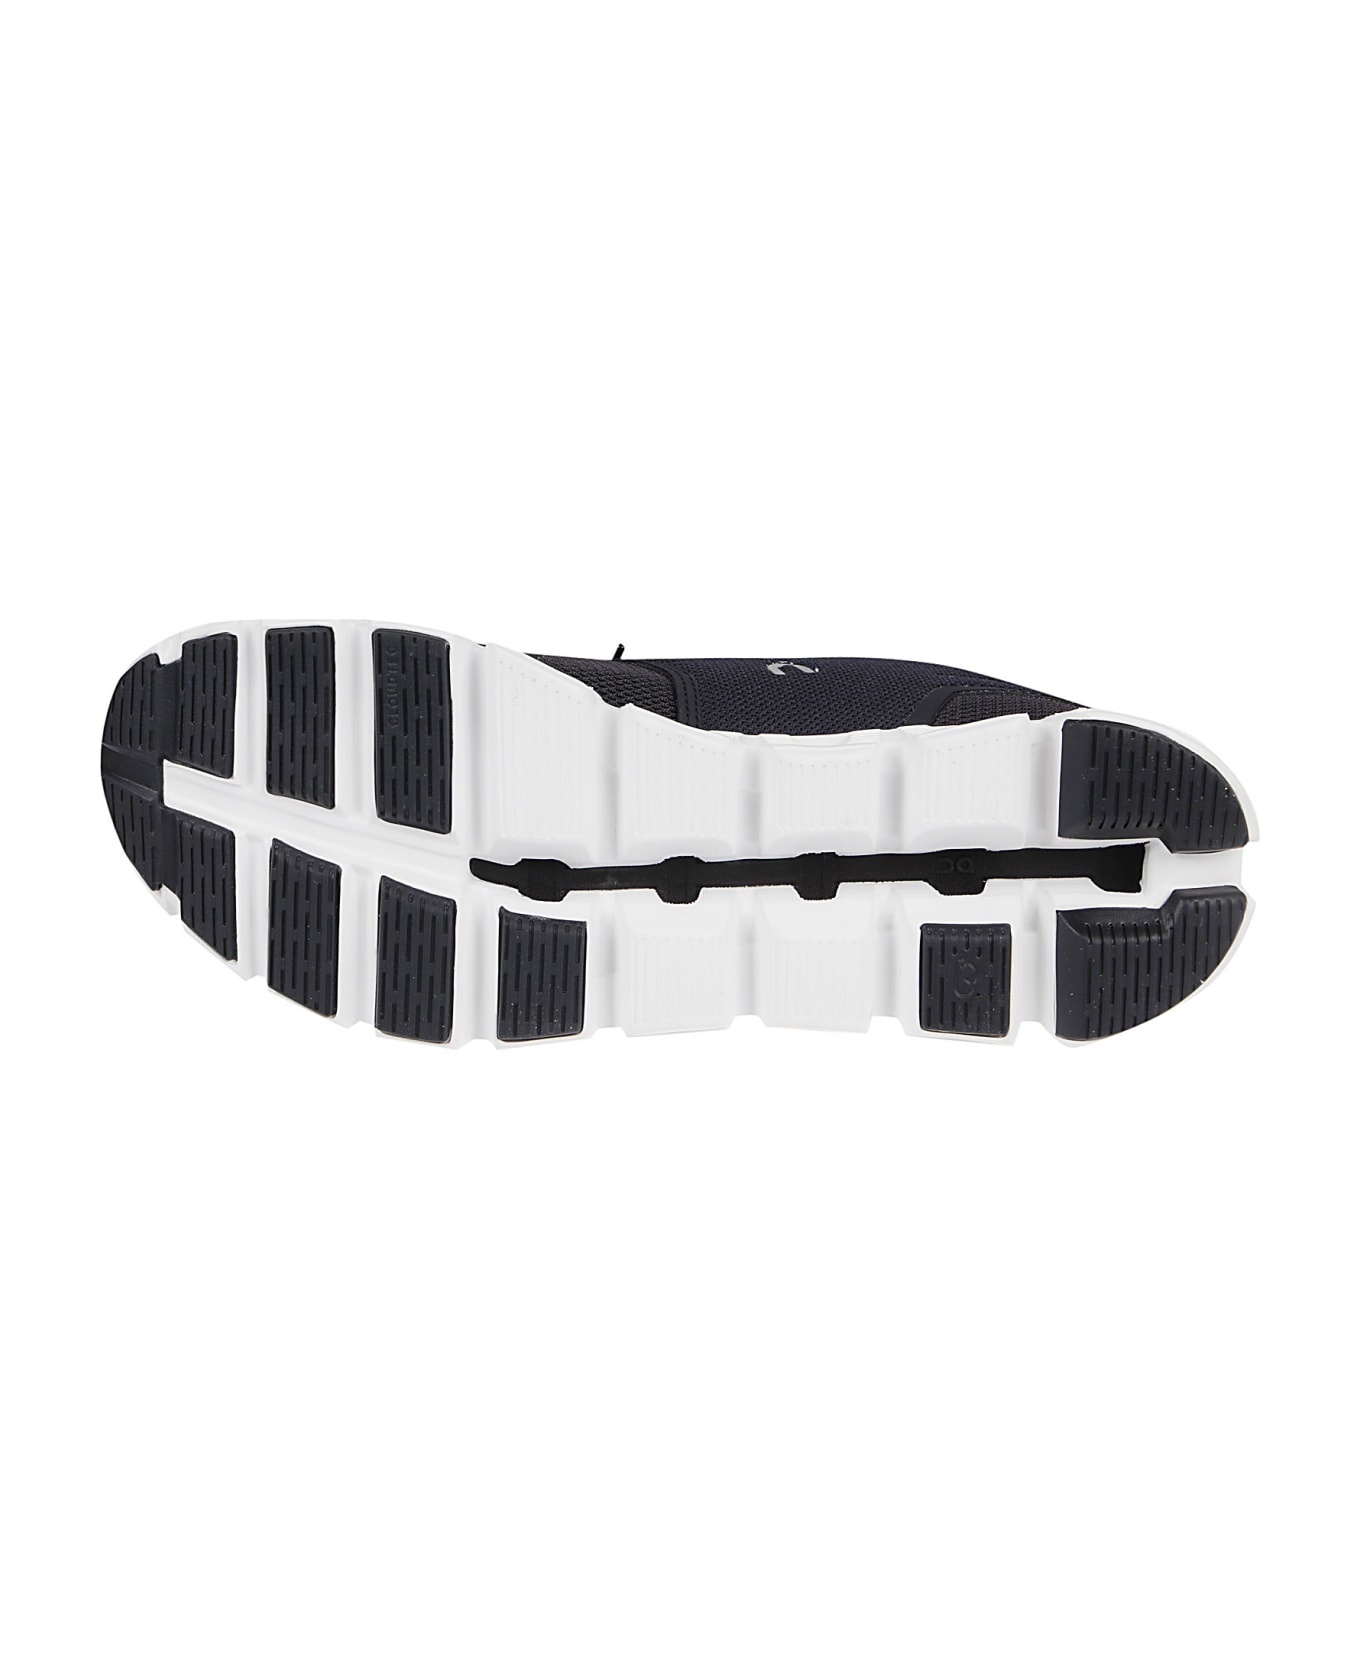 ON Cloud 5 Sneakers - Black/white